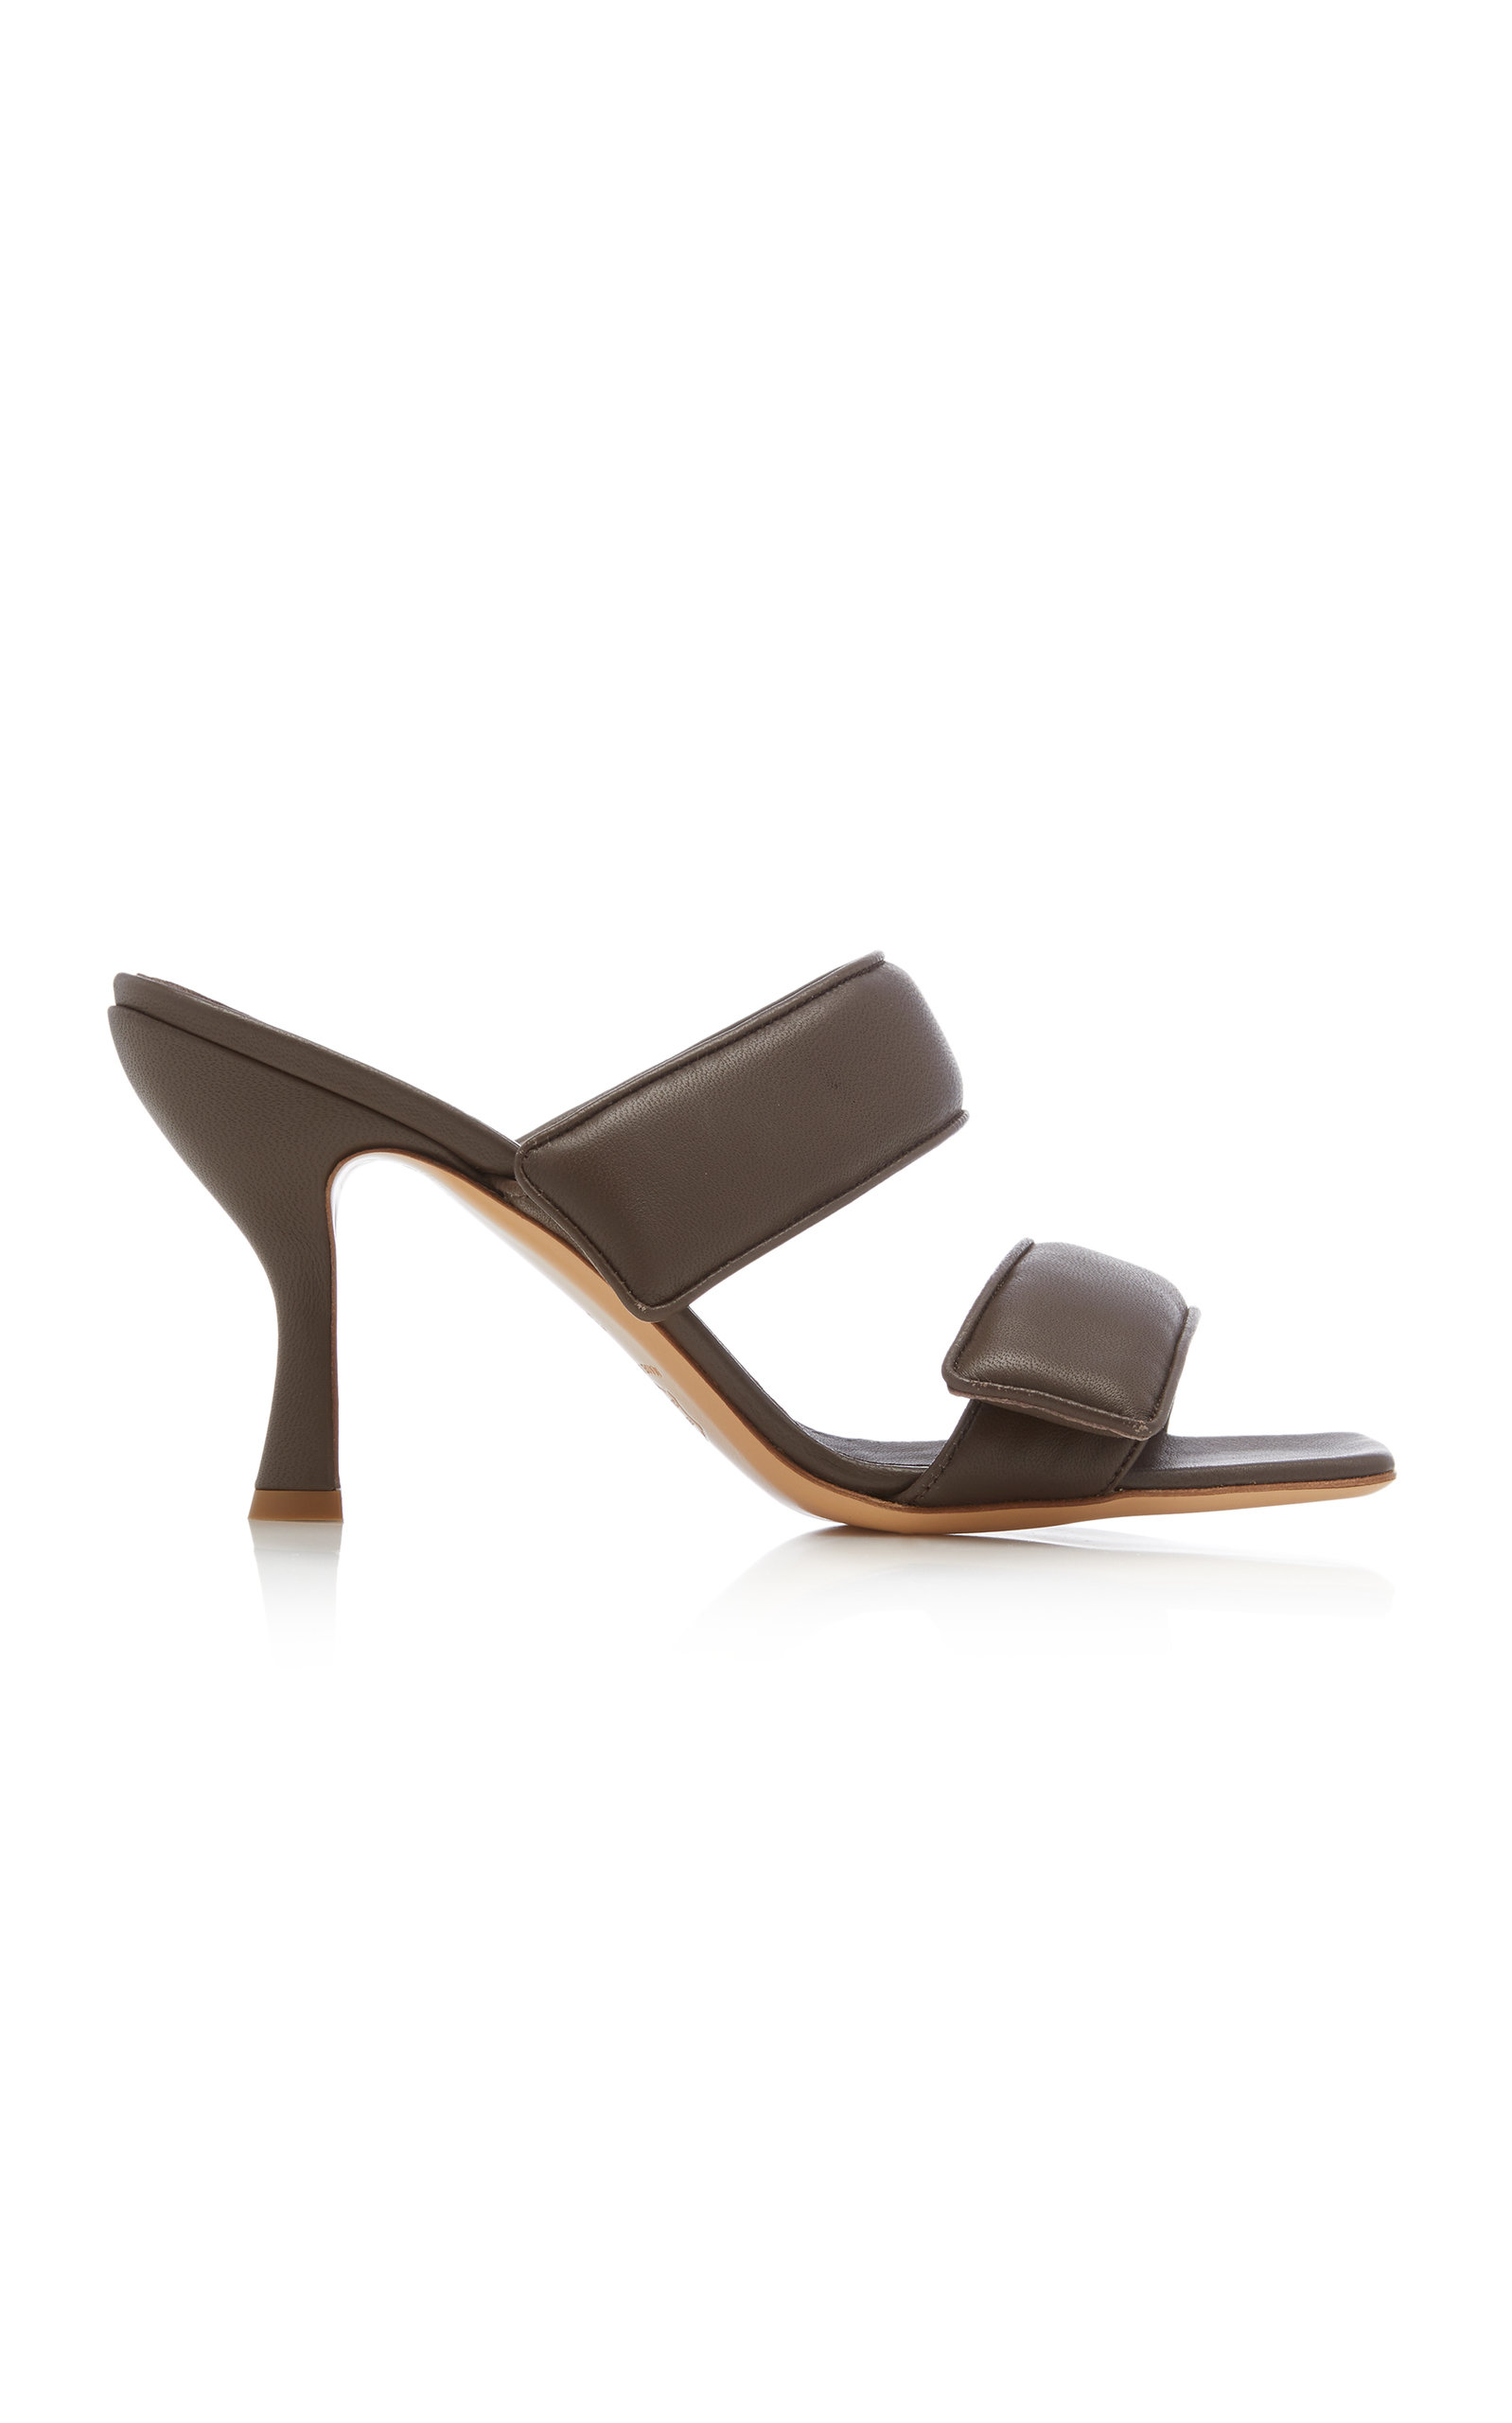 GIA x Pernille Teisbaek Women's Padded Leather Sandals